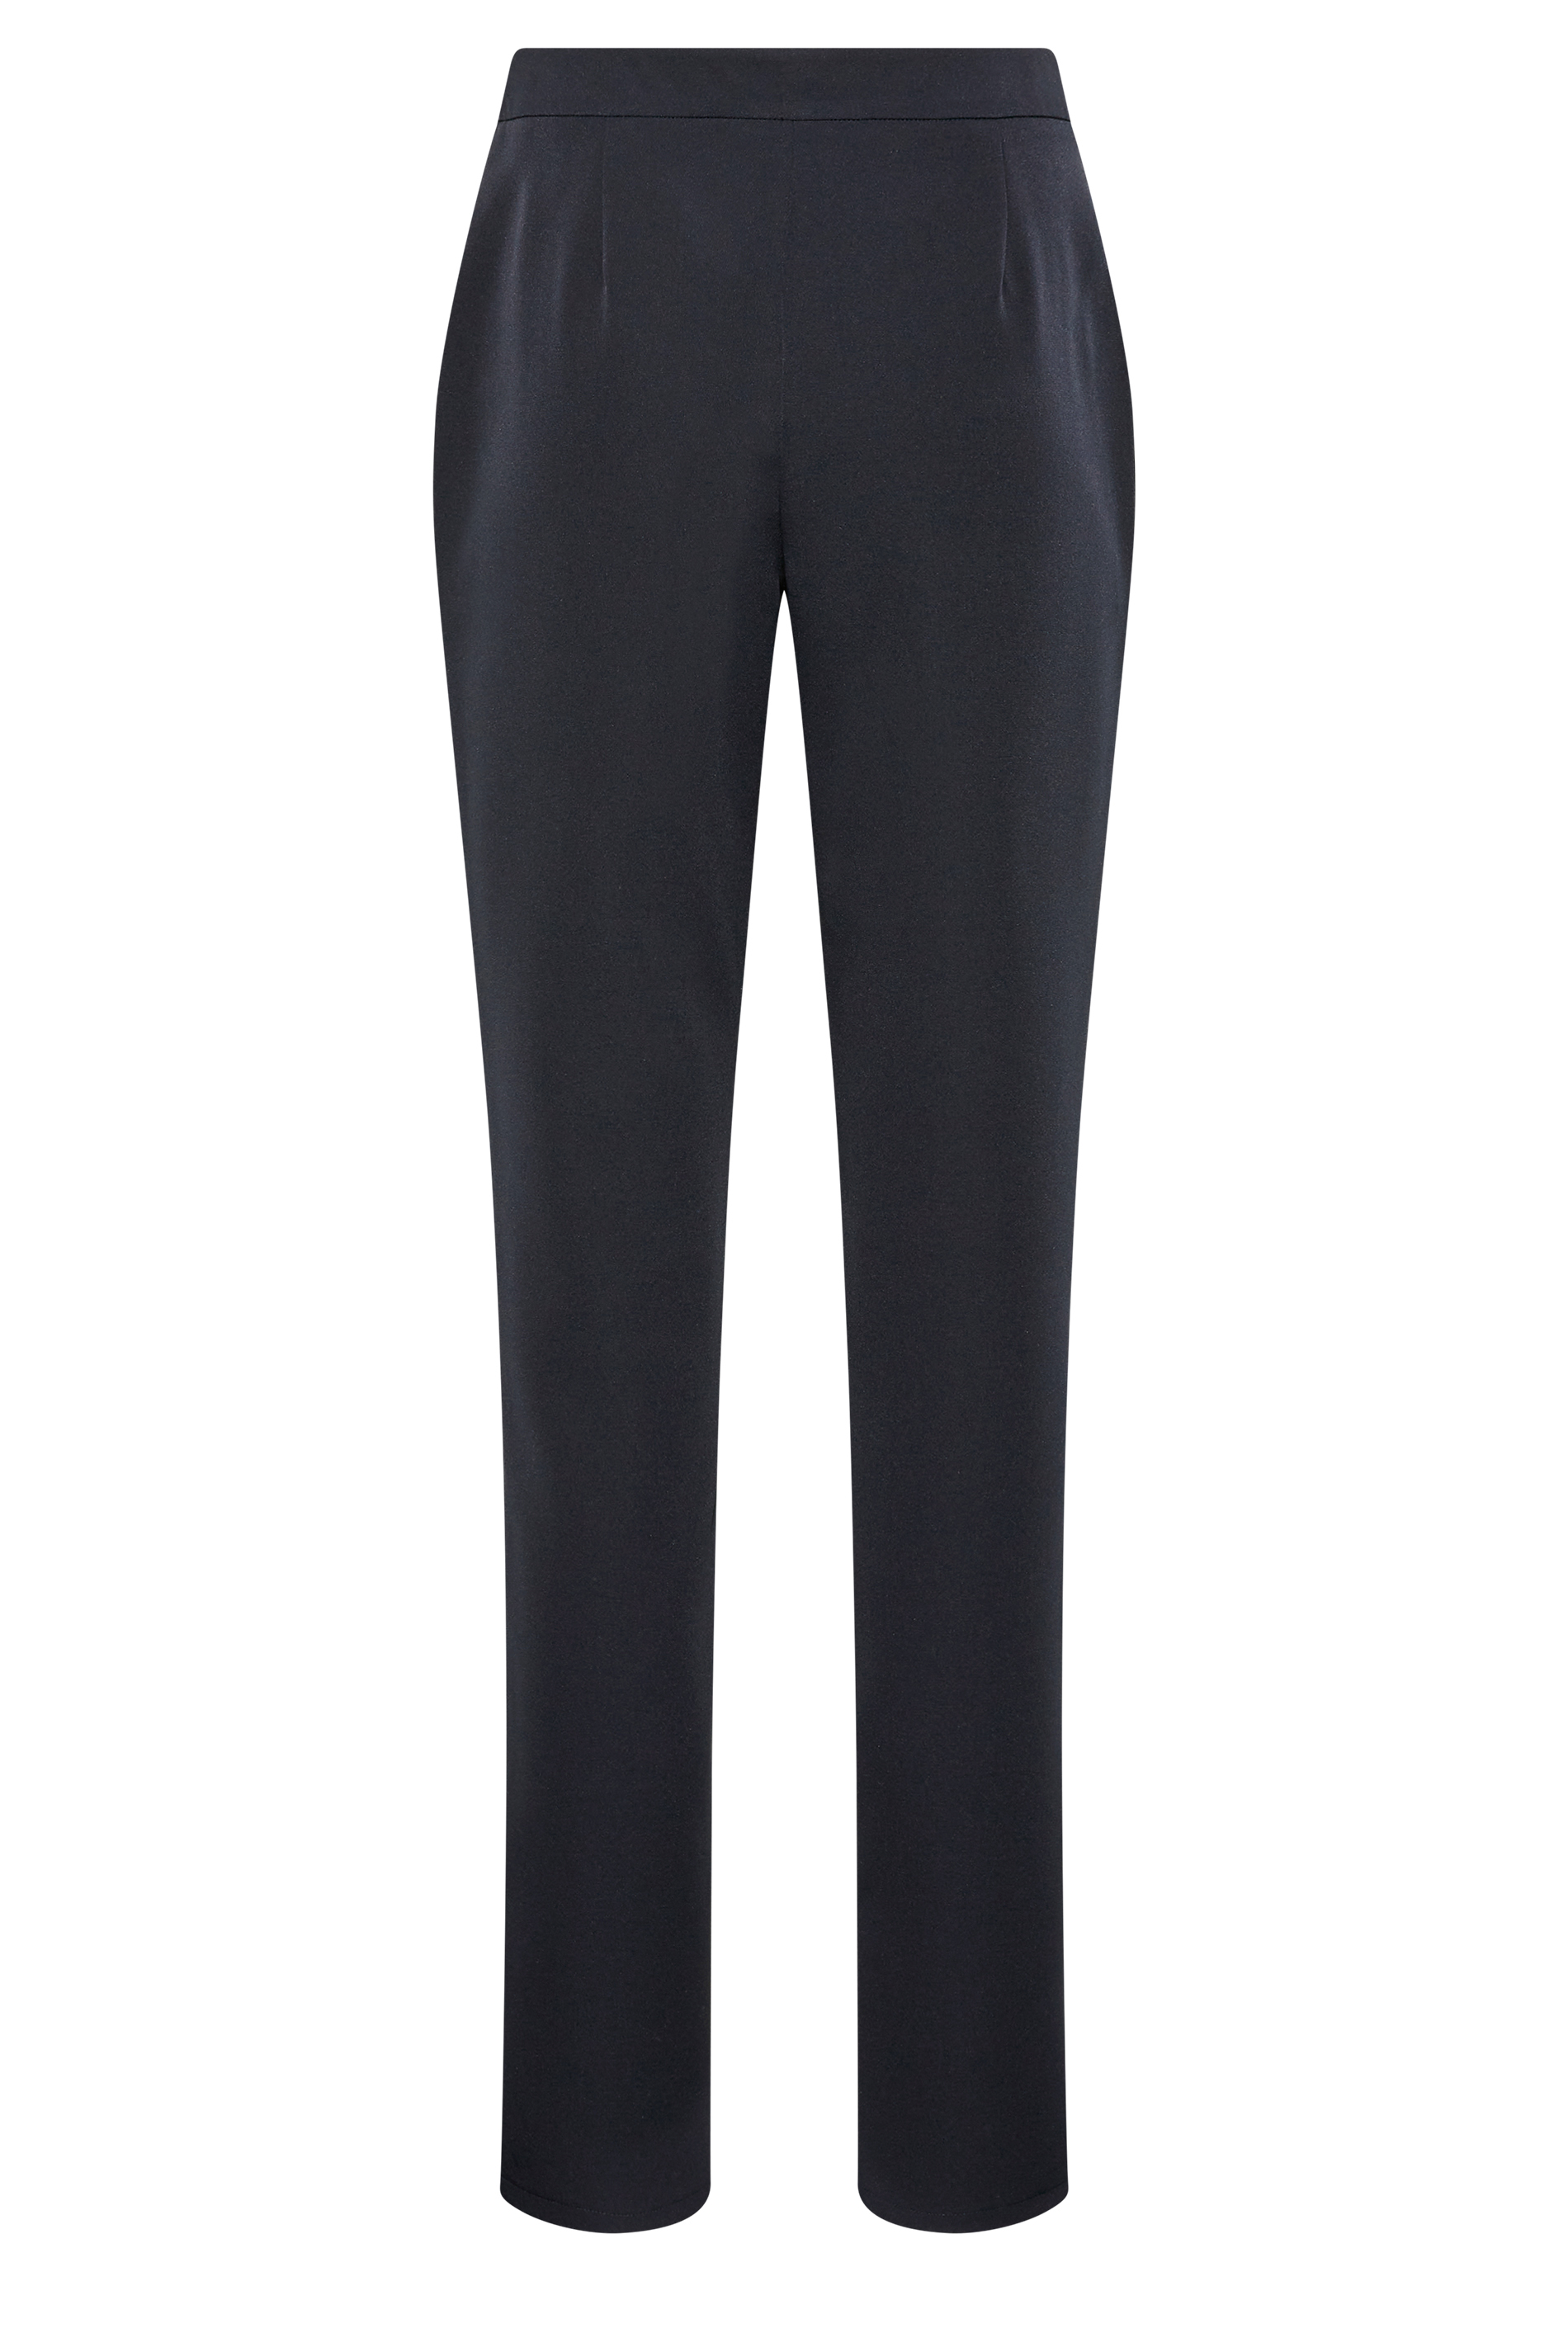 LTS Tall Women's Navy Blue Scuba Crepe Slim Leg Trousers | Long Tall Sally 3